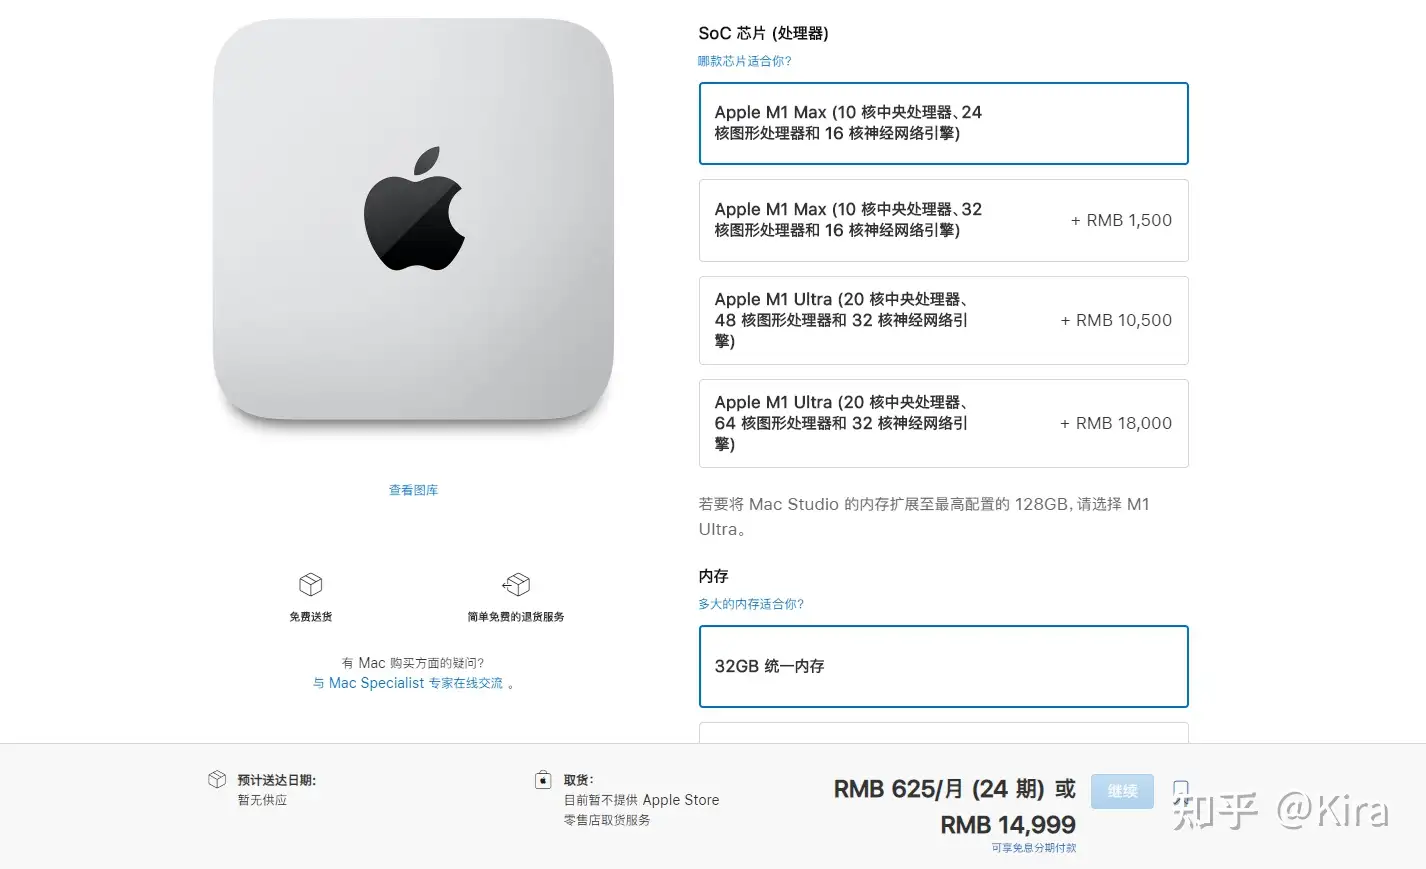 Mac Studio 起售价14999 元，M1 Ultra 芯片版29999 元，如何评价价格